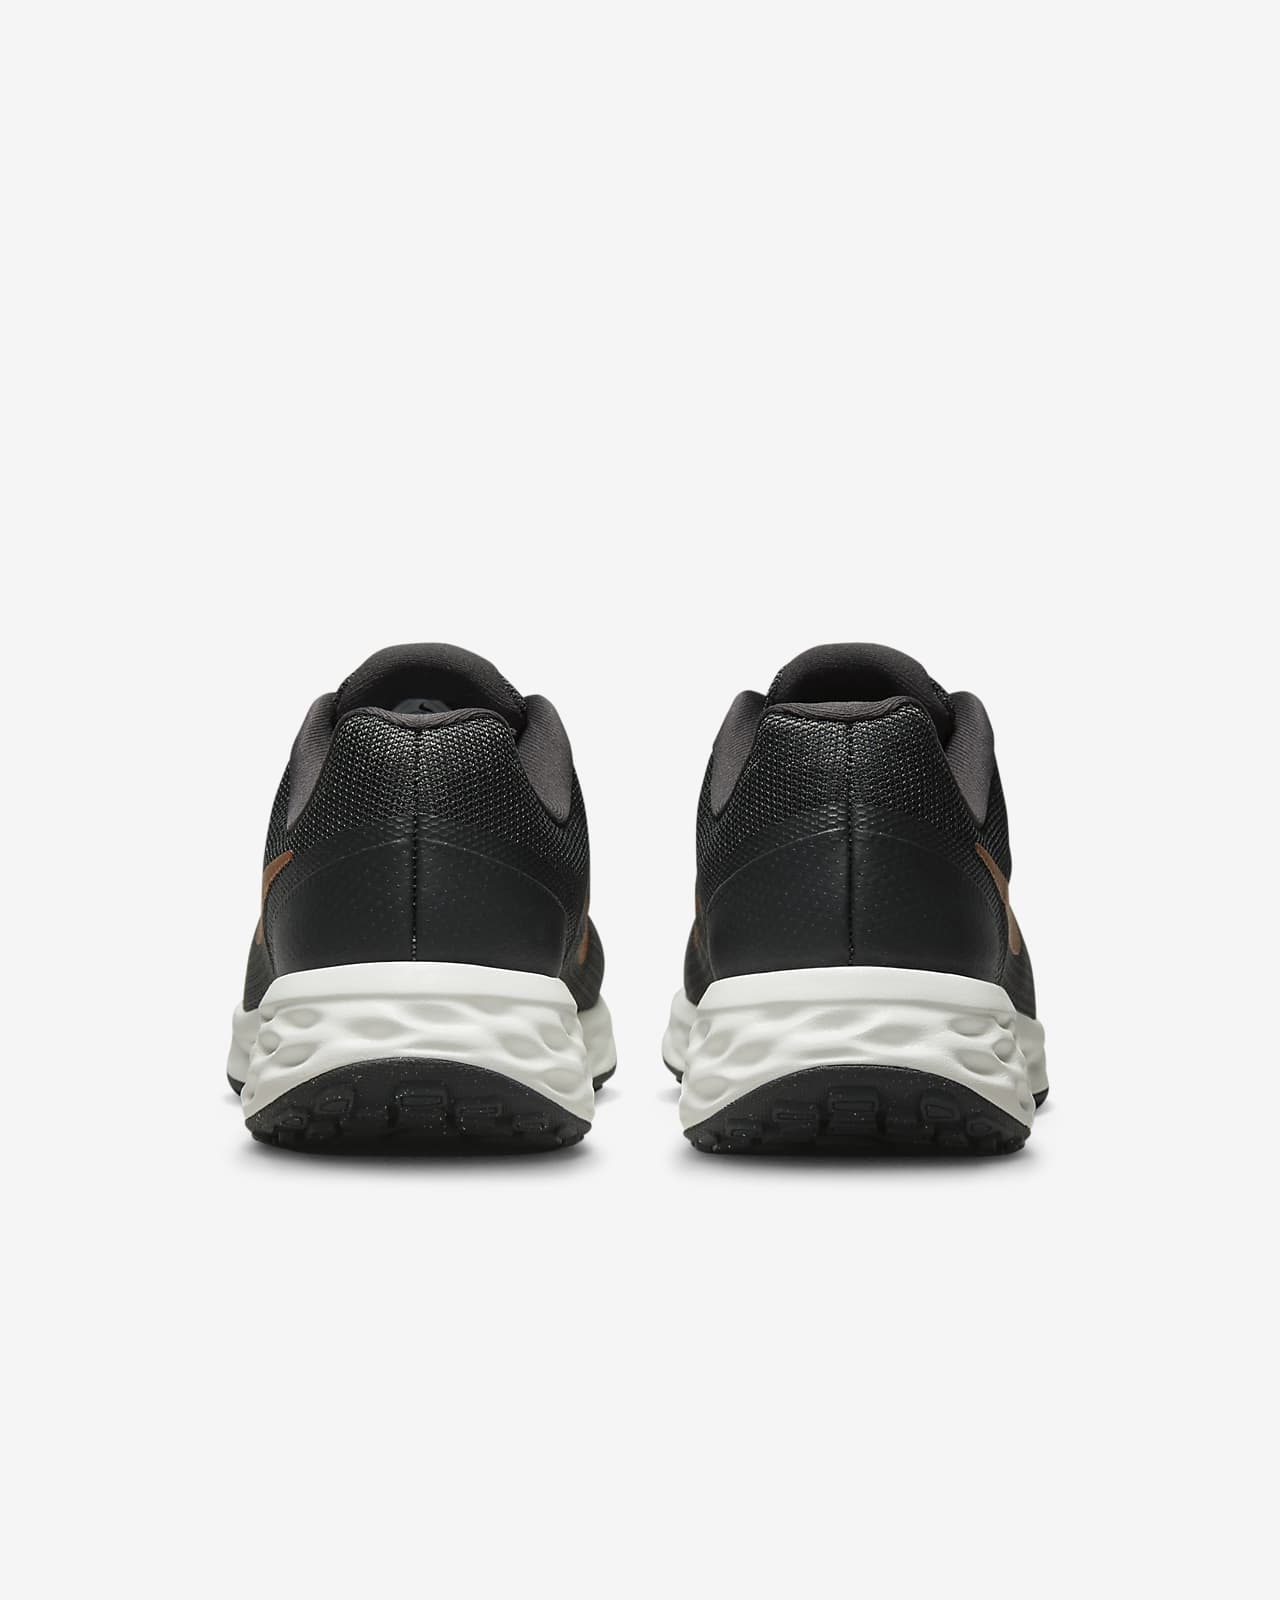 Revolution 6 Next Women's Running Shoes. Nike IE